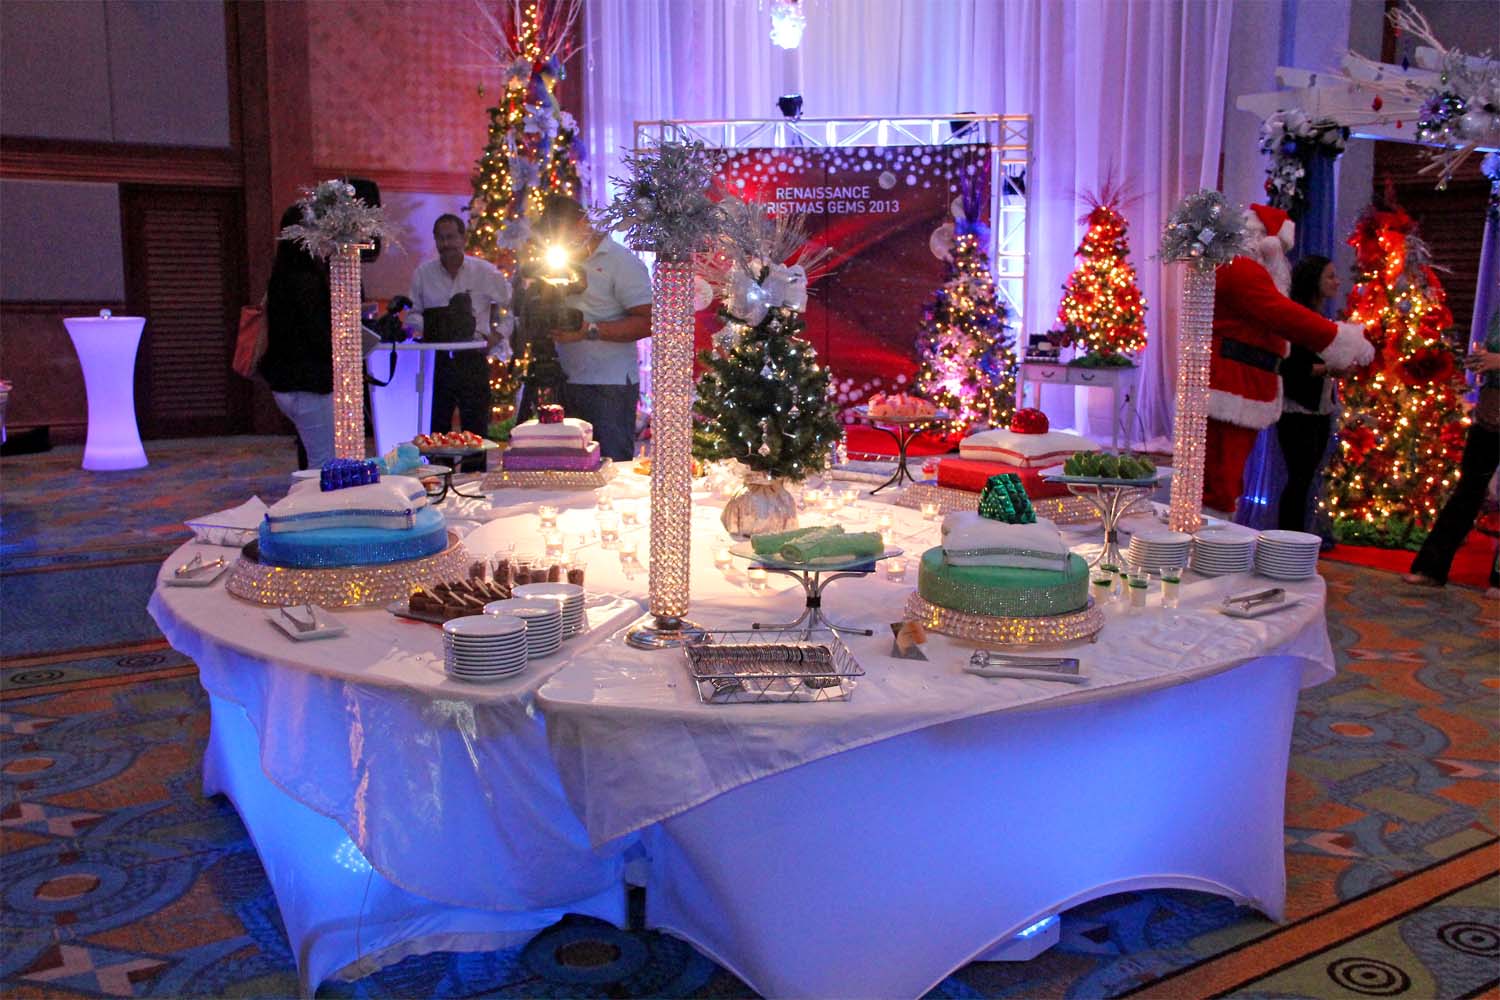 Renaissance Convention Center ta presenta su “Christmas Gems 2013 Dinner and Dance Party”